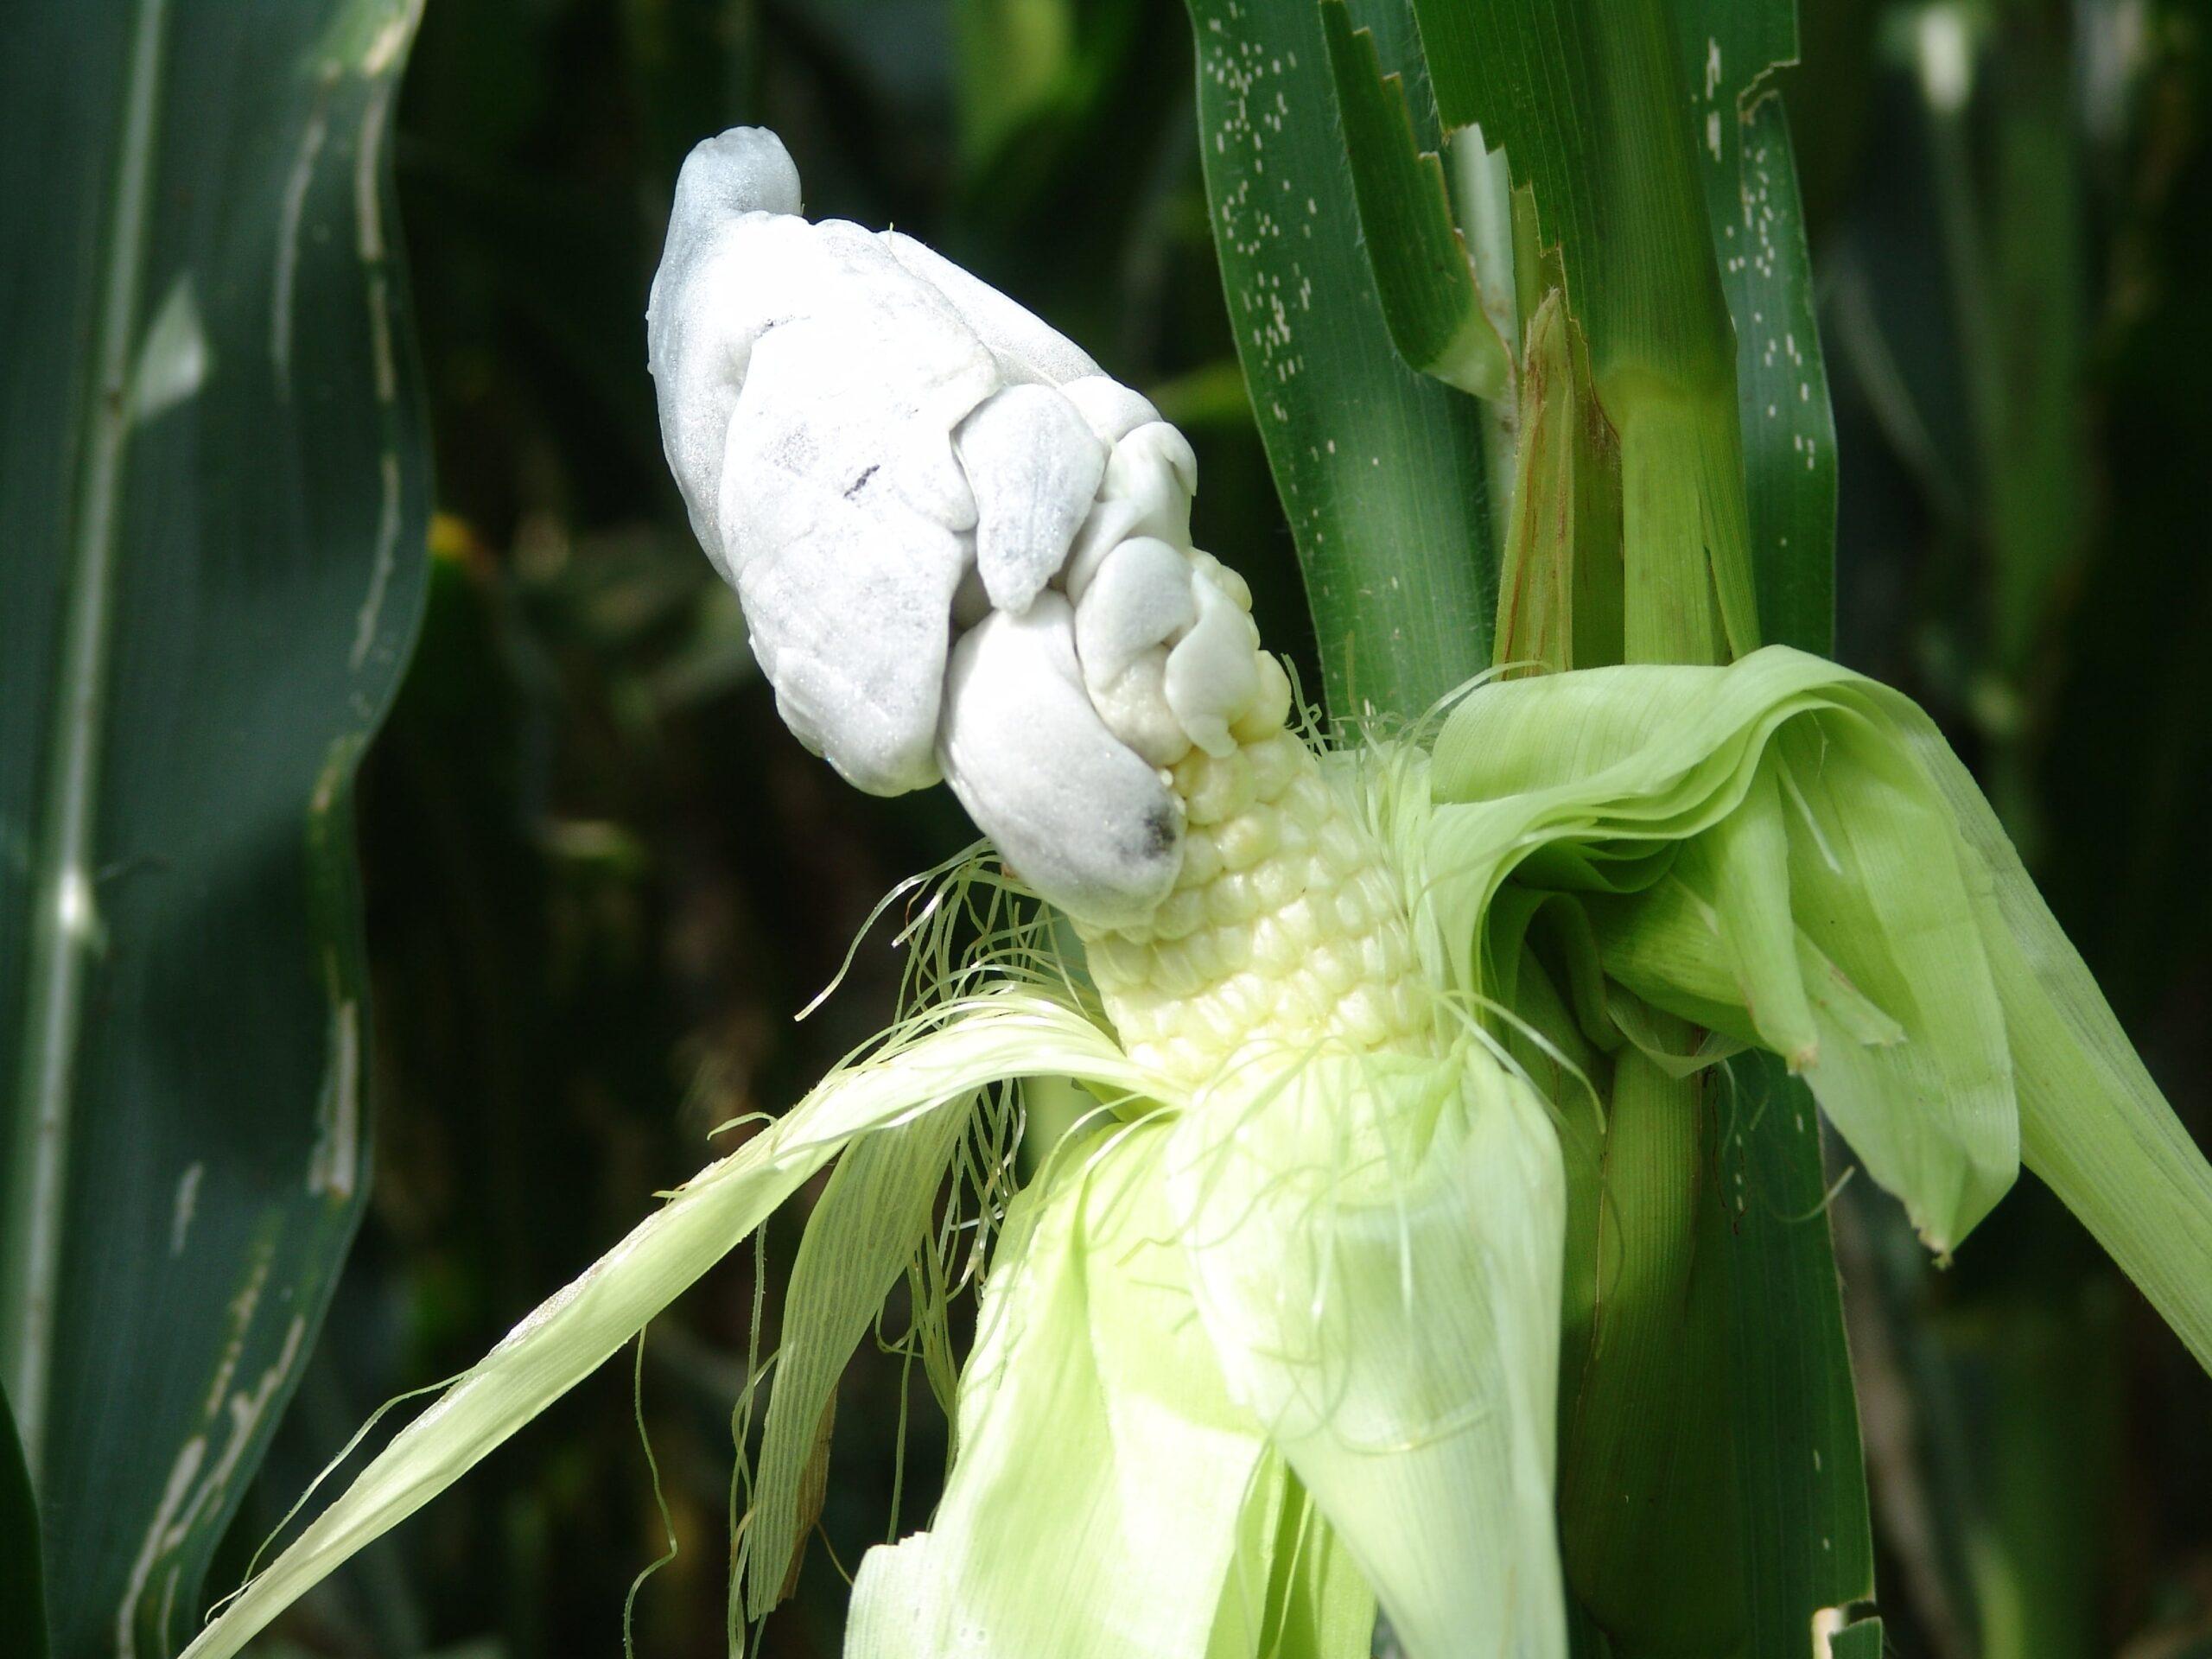 Common corn smut